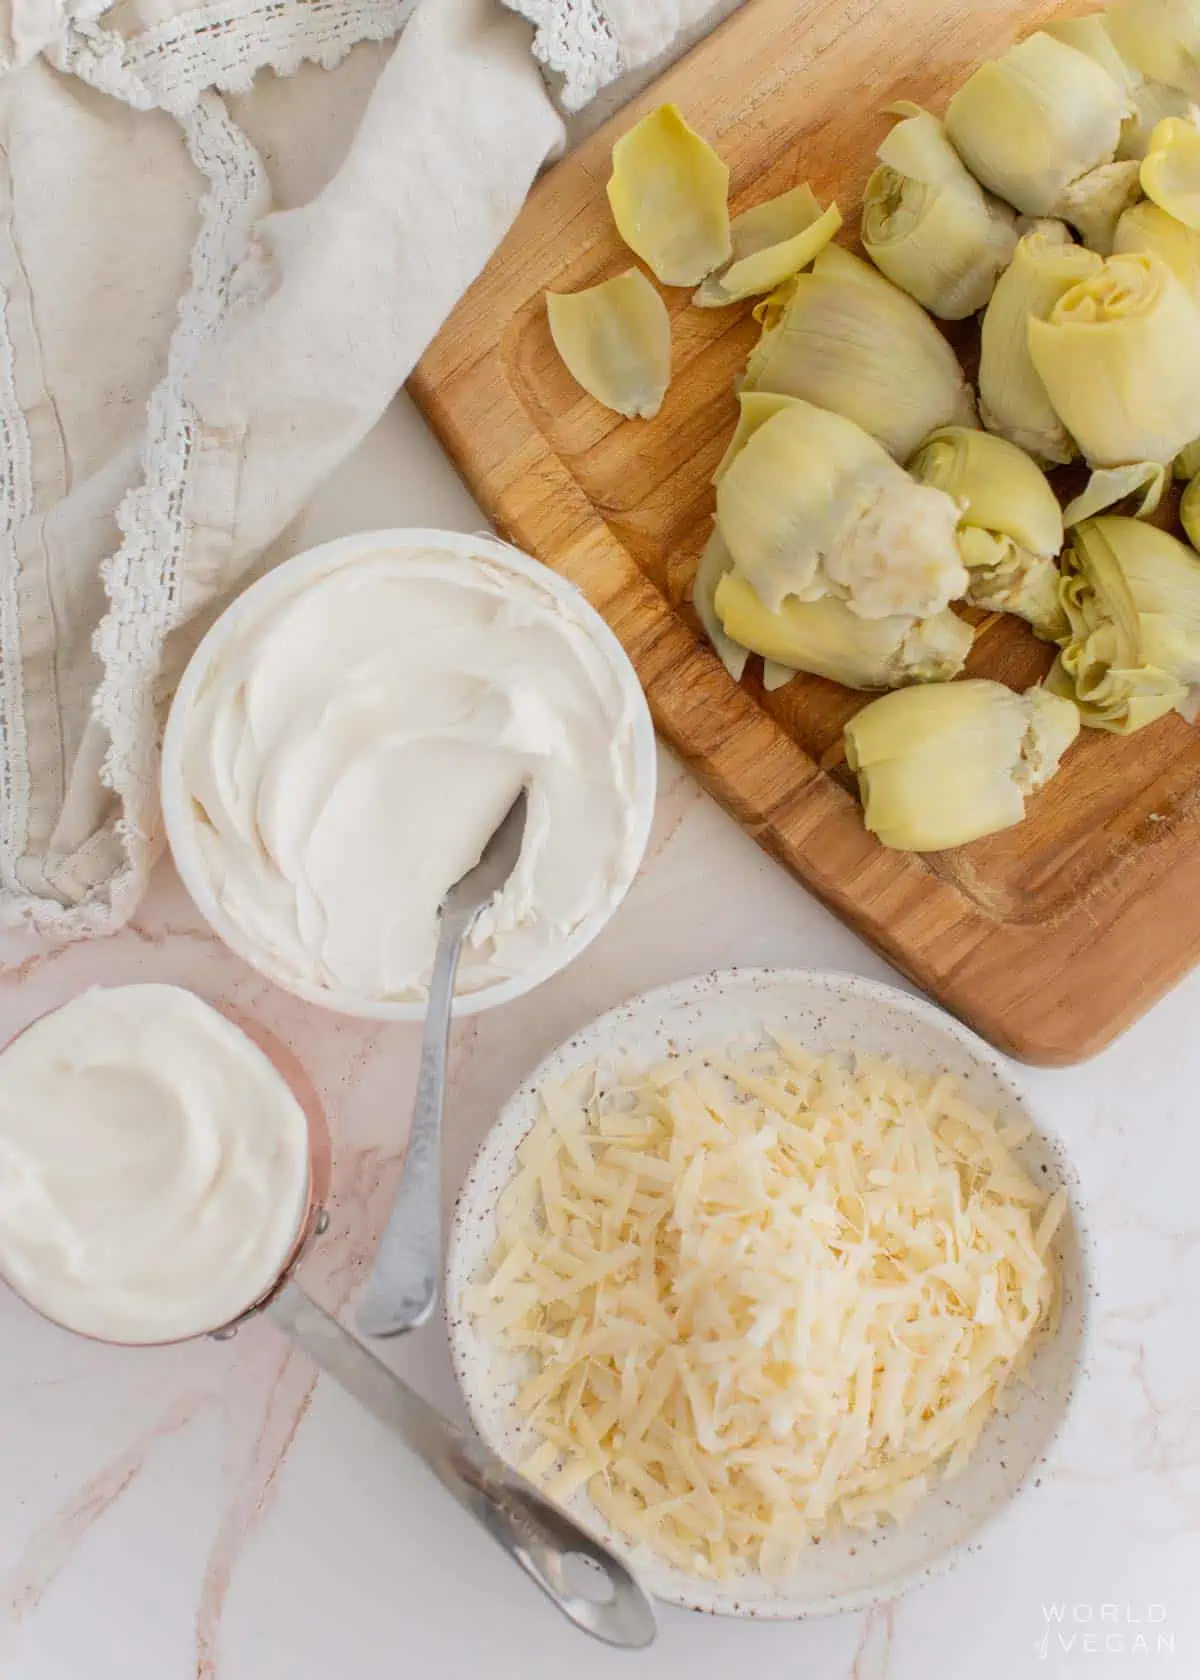 vegan artichoke dip ingredients parmesan dairy free cream cheese mayo and artichokes